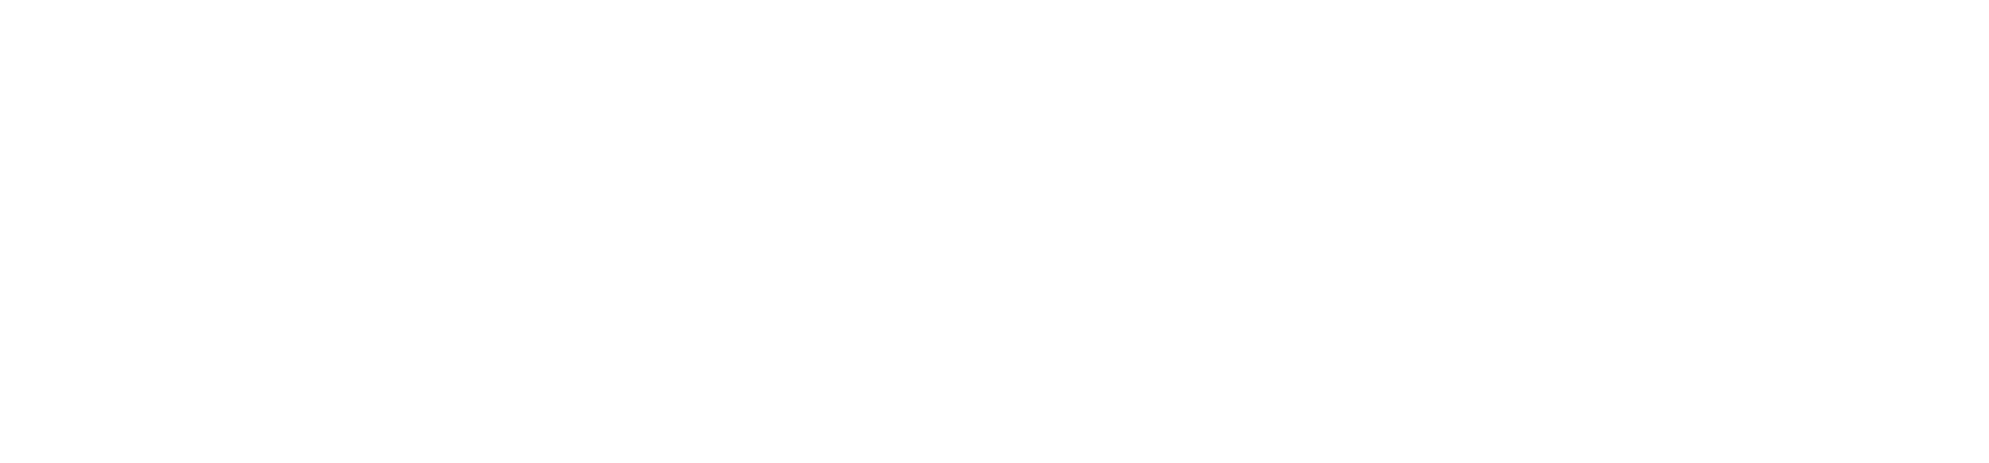 Creditcar